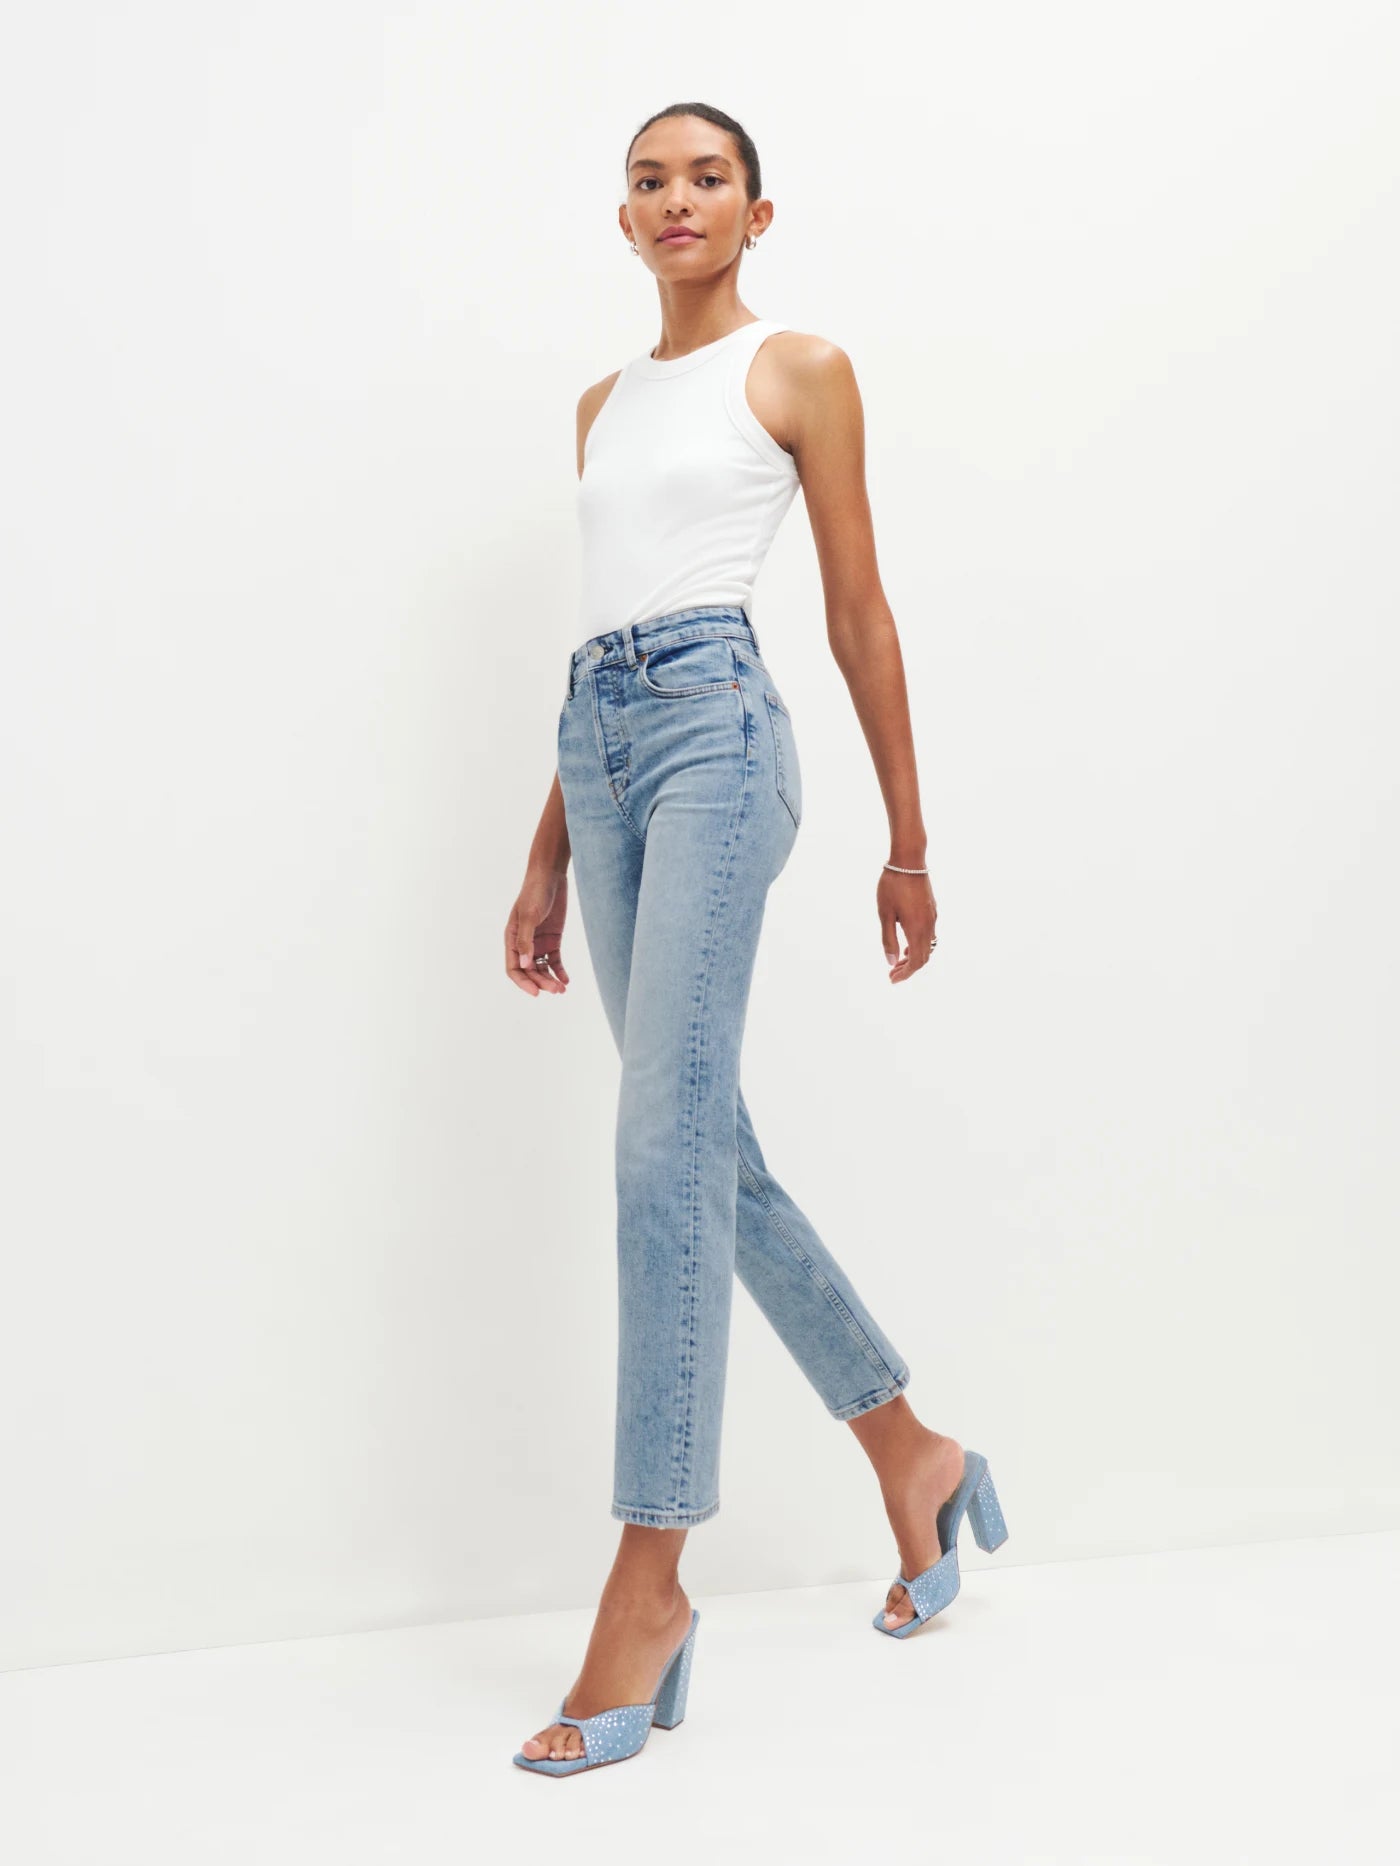 Denim High Waist Jeans For Women's